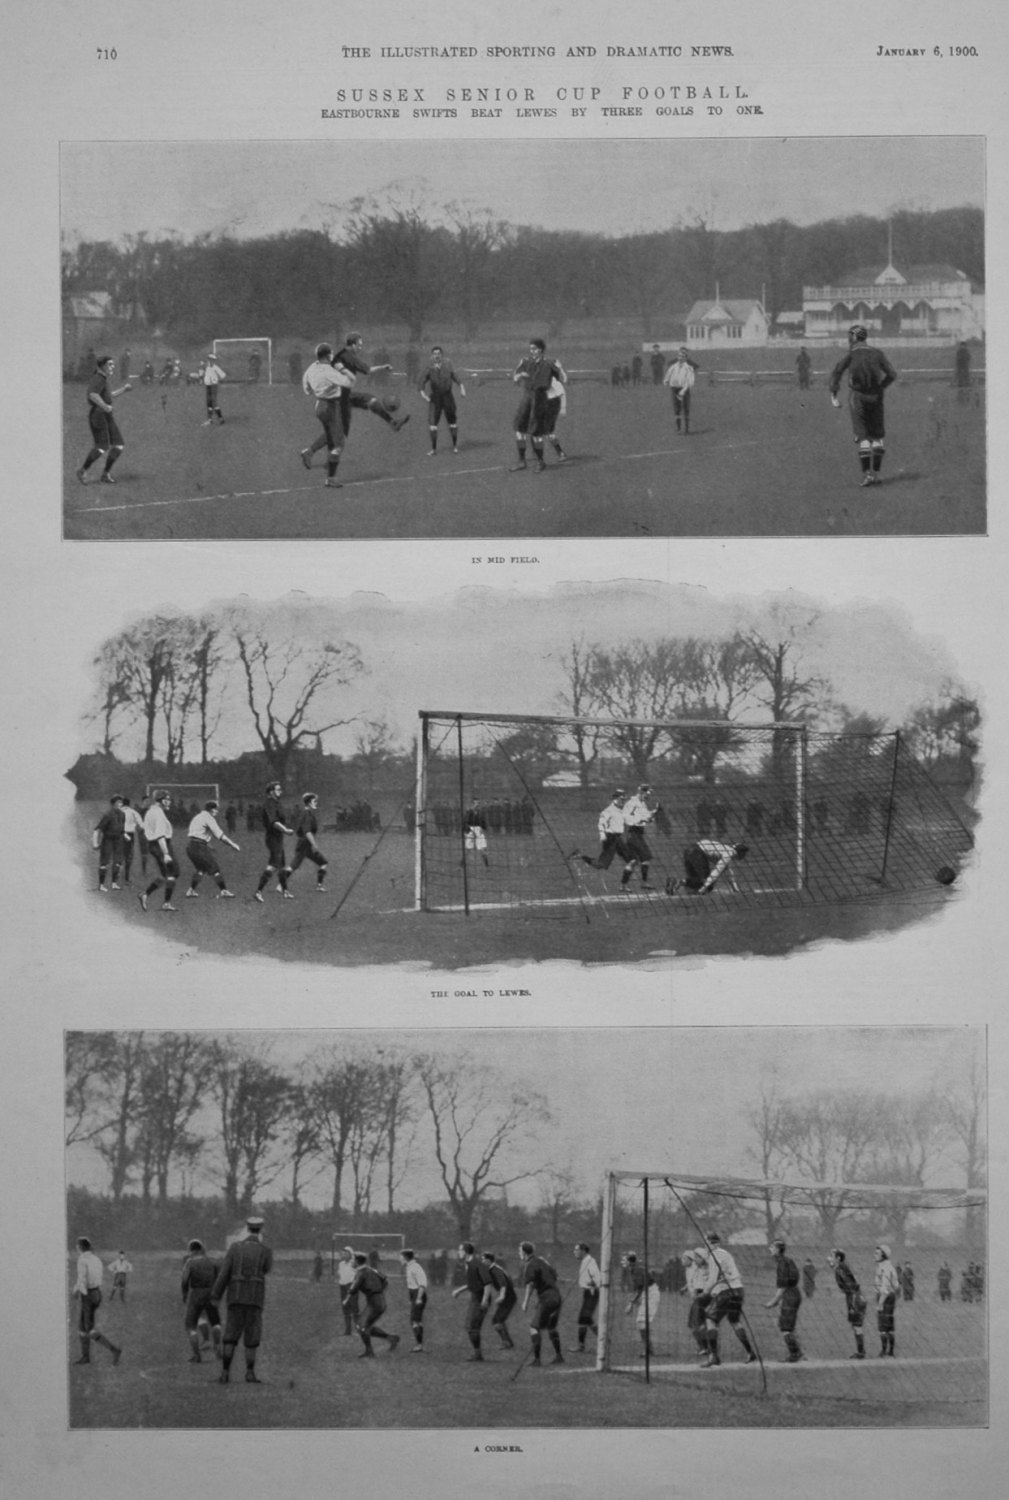 Sussex Senior Cup Football. 1900.